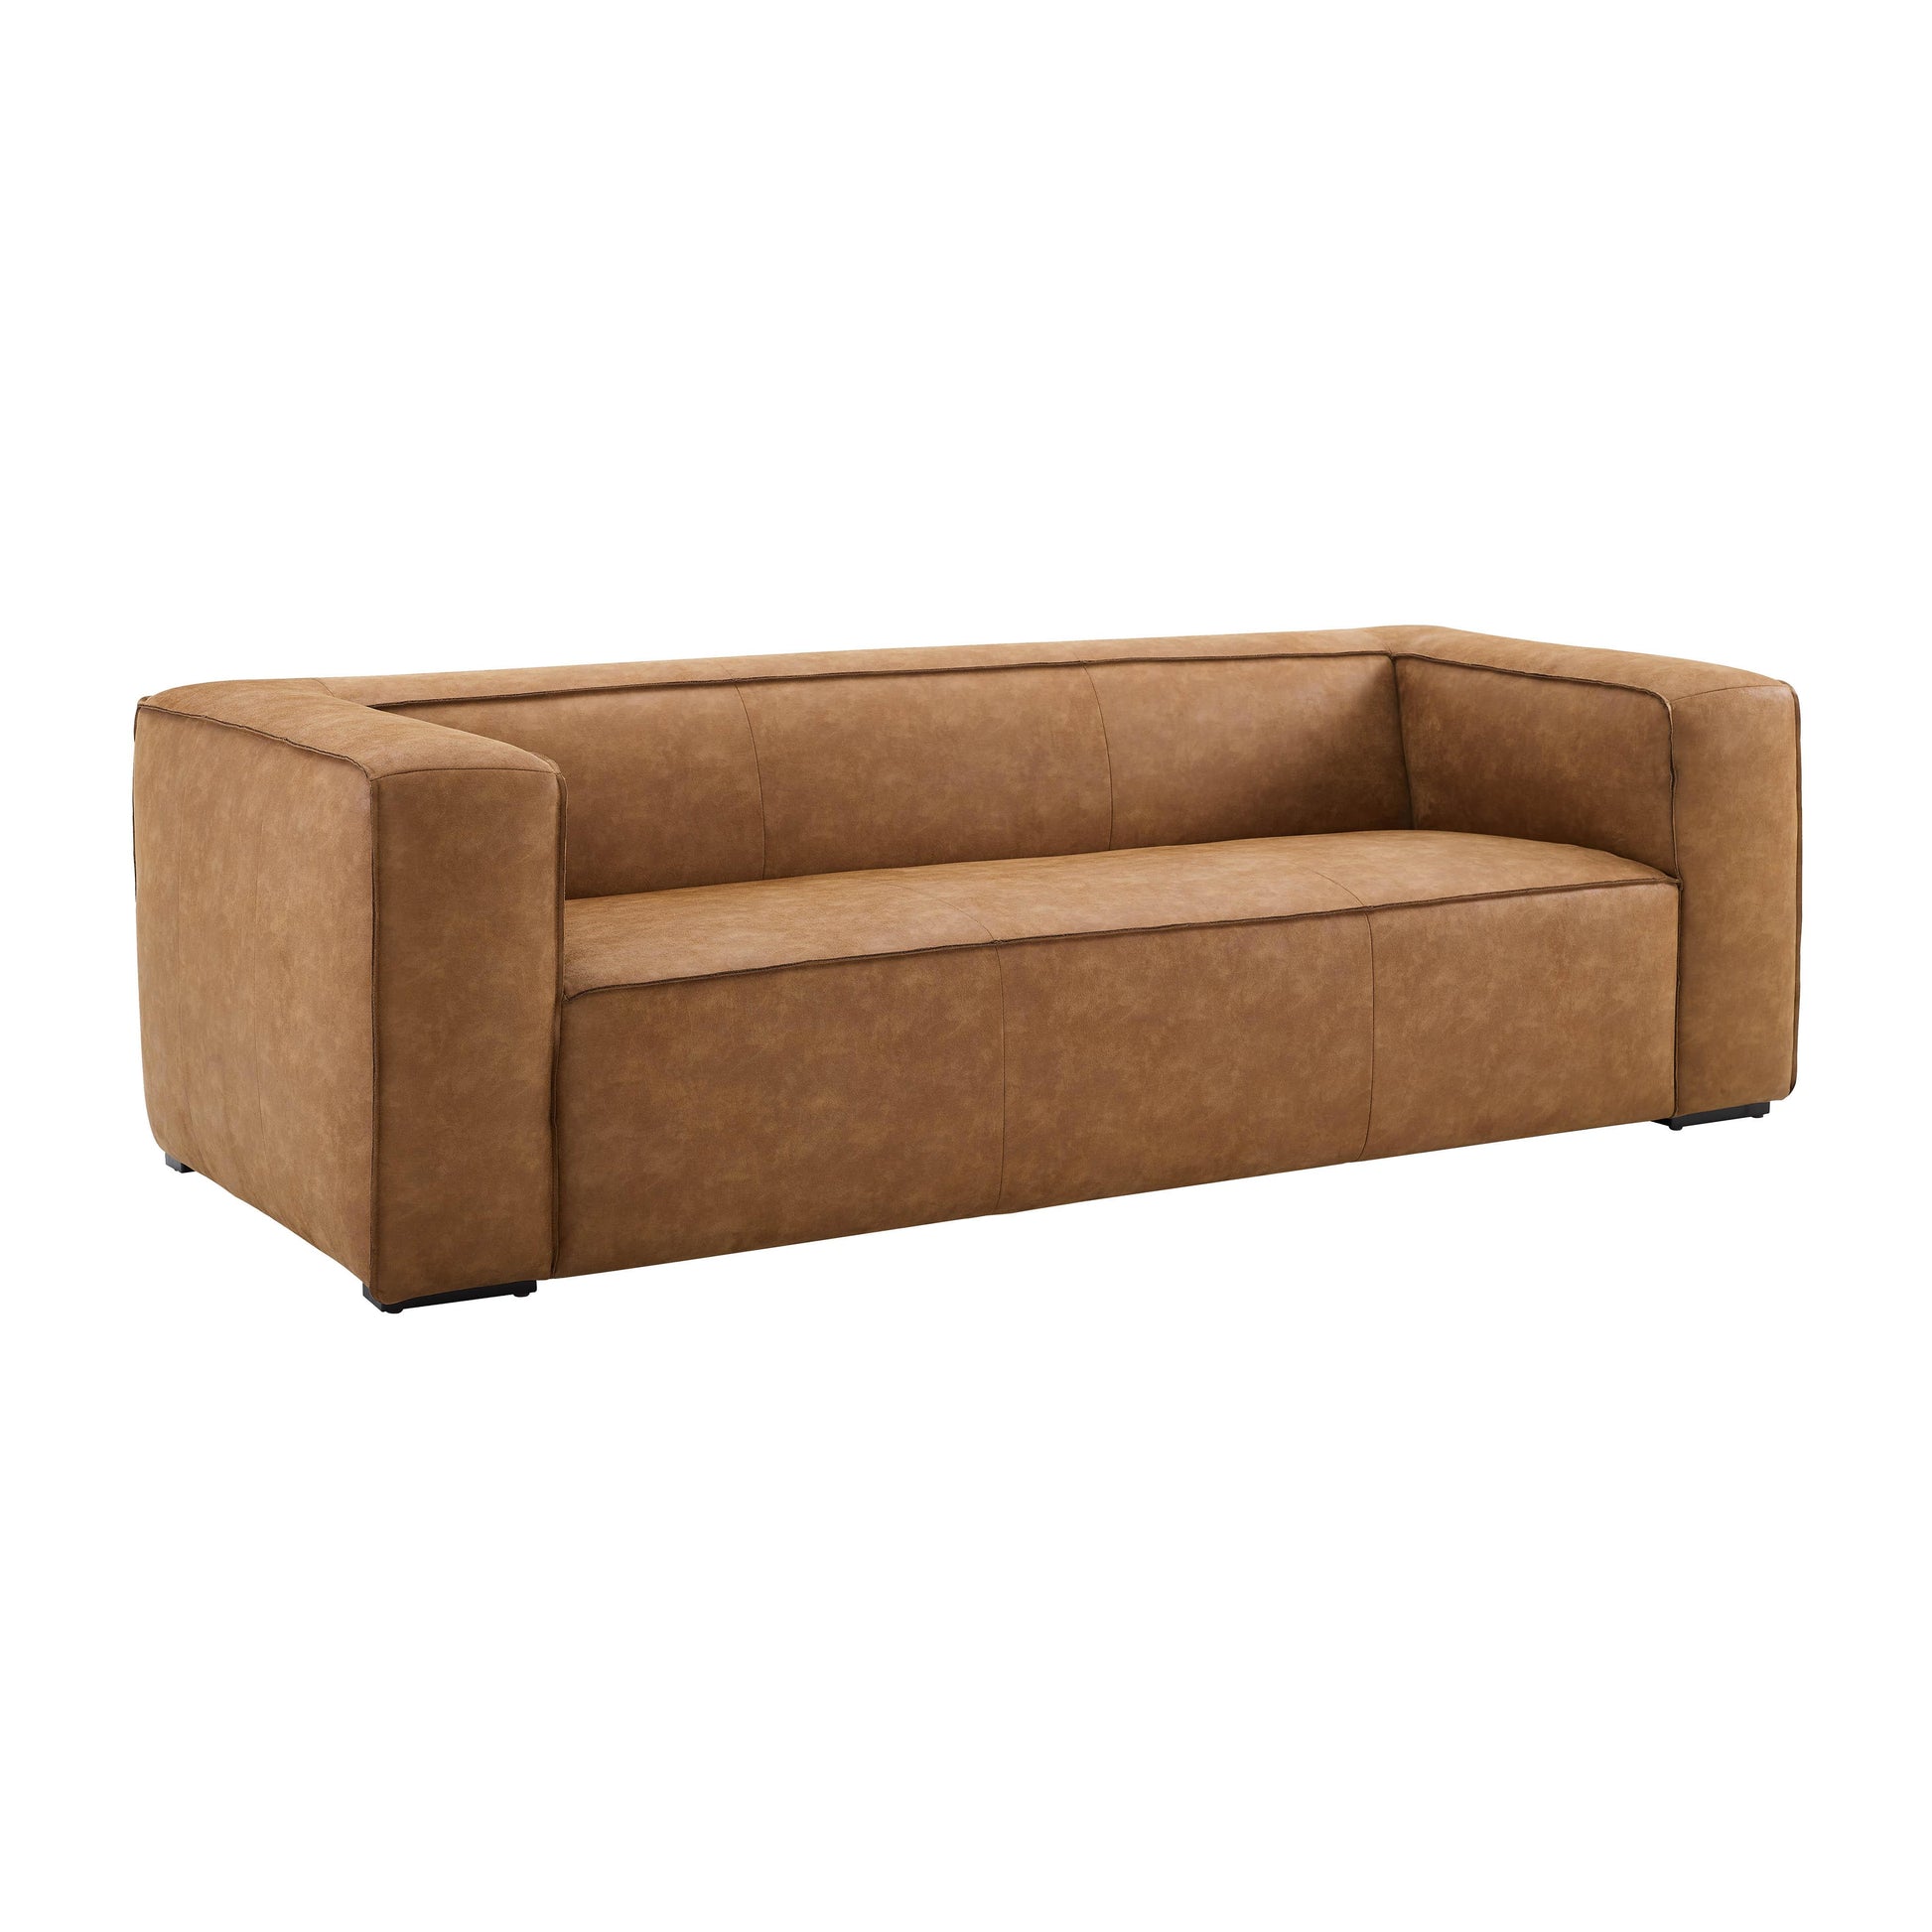 Tov Furniture Aurora Sofa